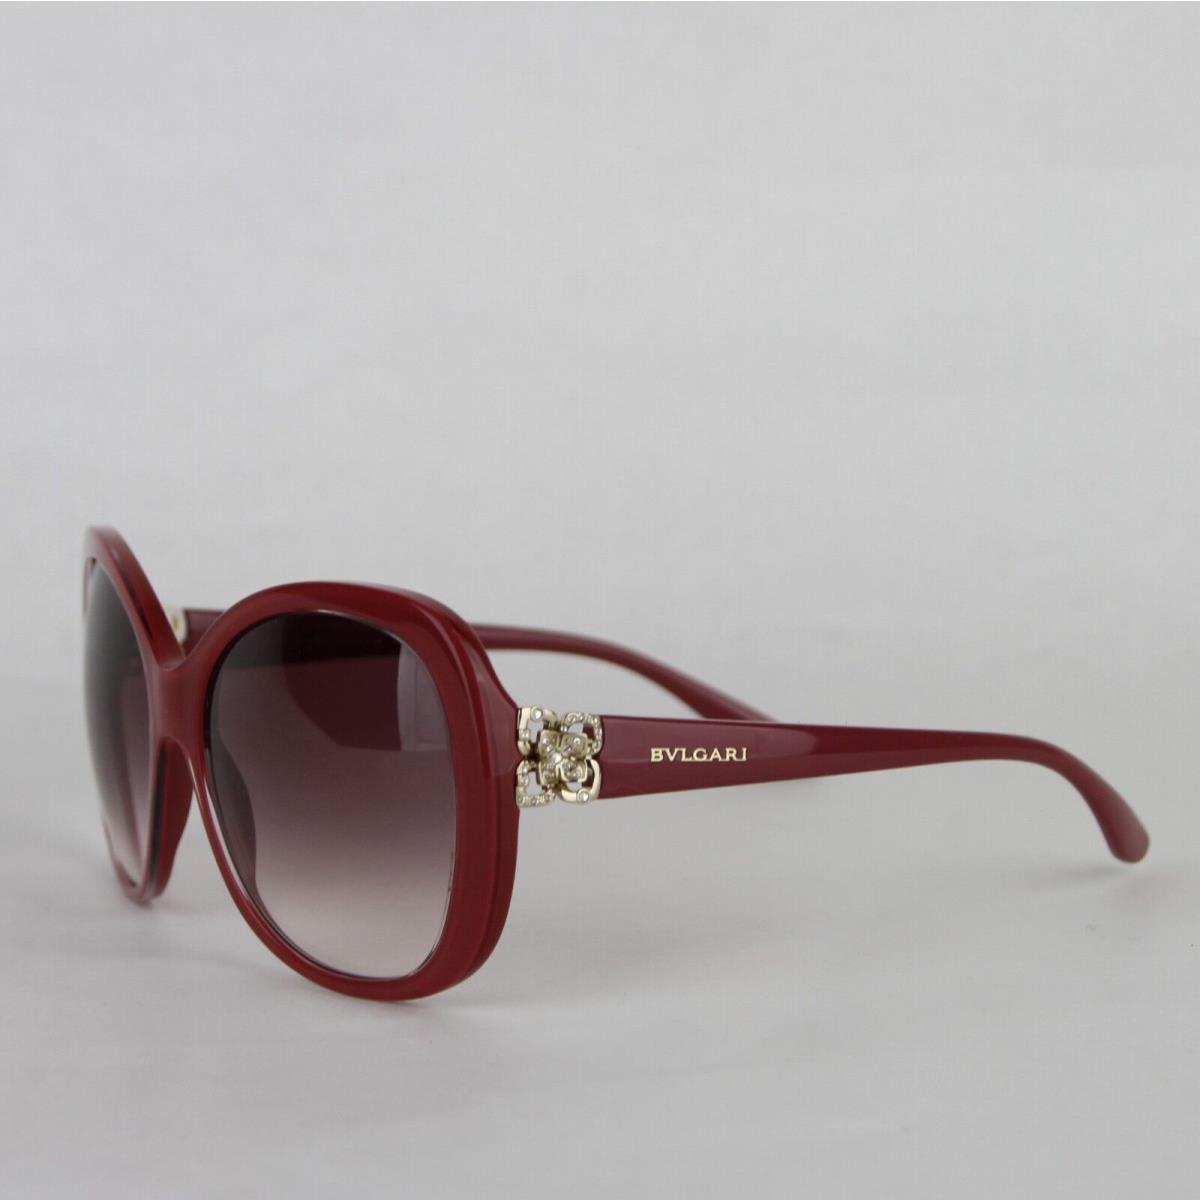 Bvlgari sunglasses  - Pink Frame, Pink Lens 1